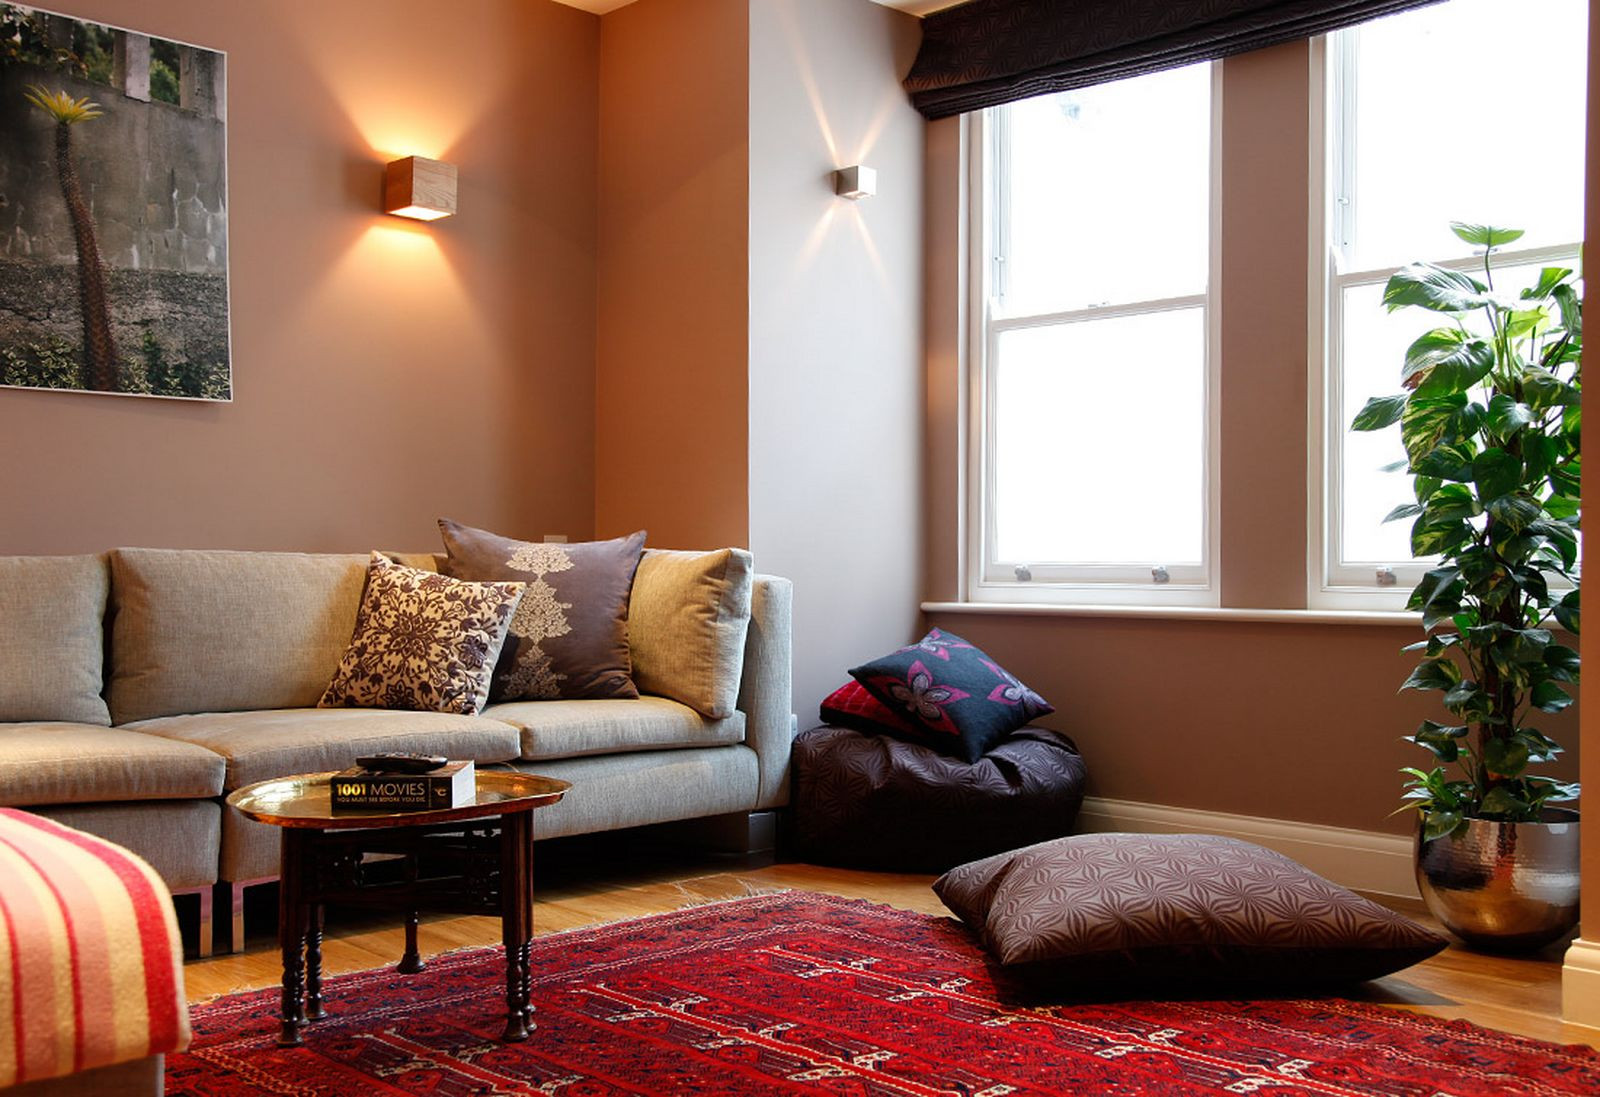 Apartment Living Room Decoration Ideas
 The Best Living Room Decor Ideas that You can Fix by